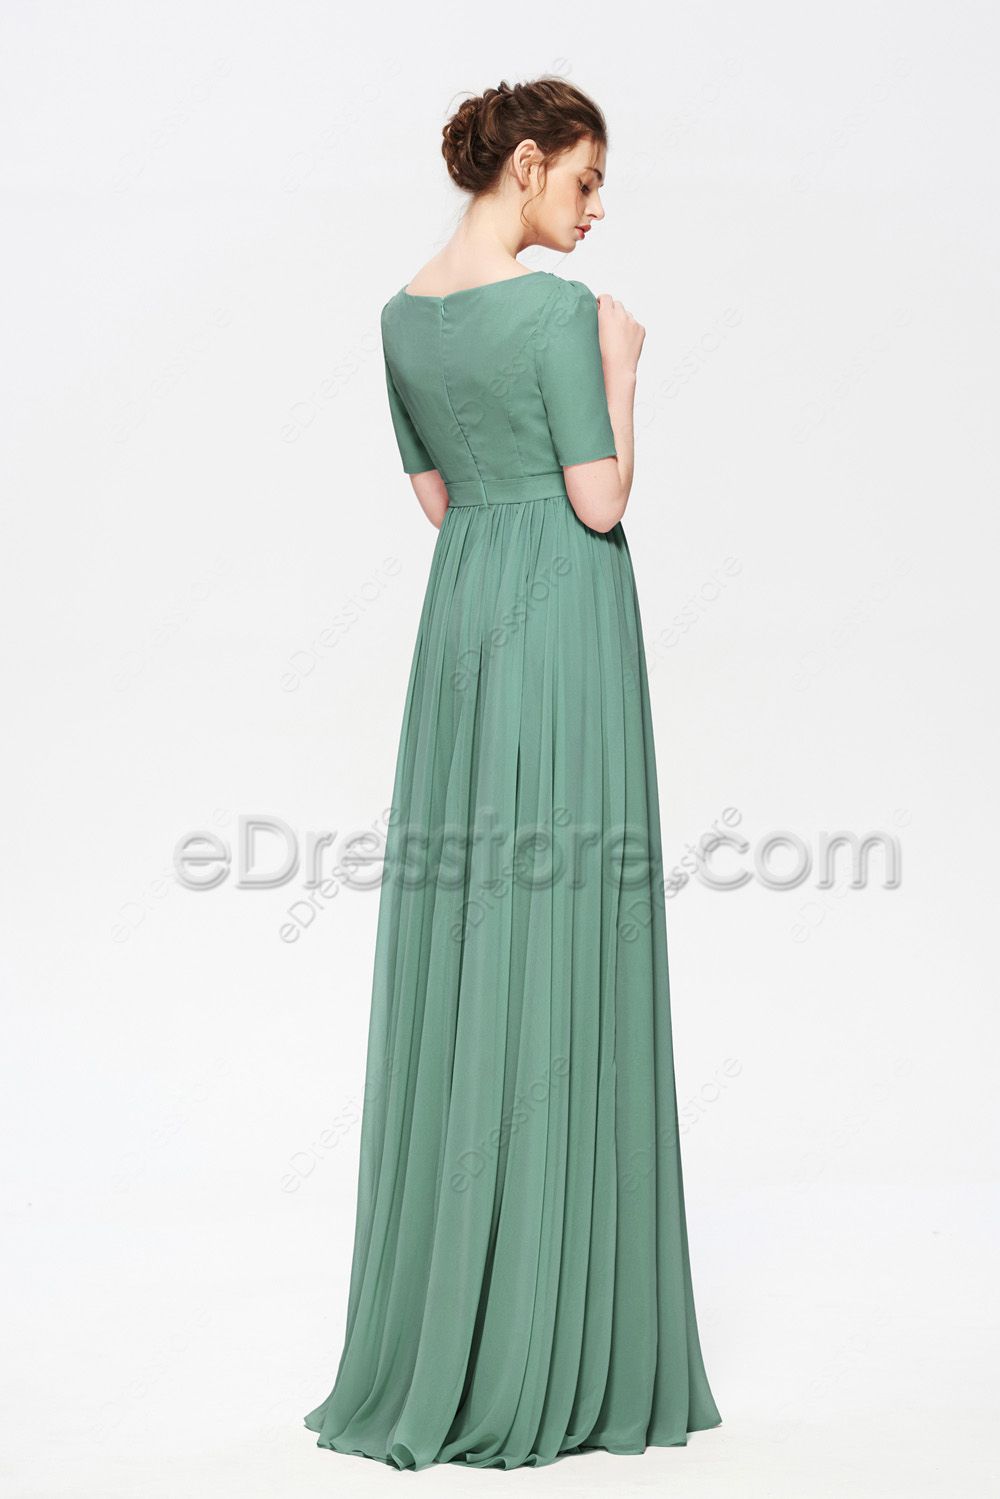 Modest LDS Eucalyptus Green Bridesmaid Dresses Elbow Sleeves | eDresstore